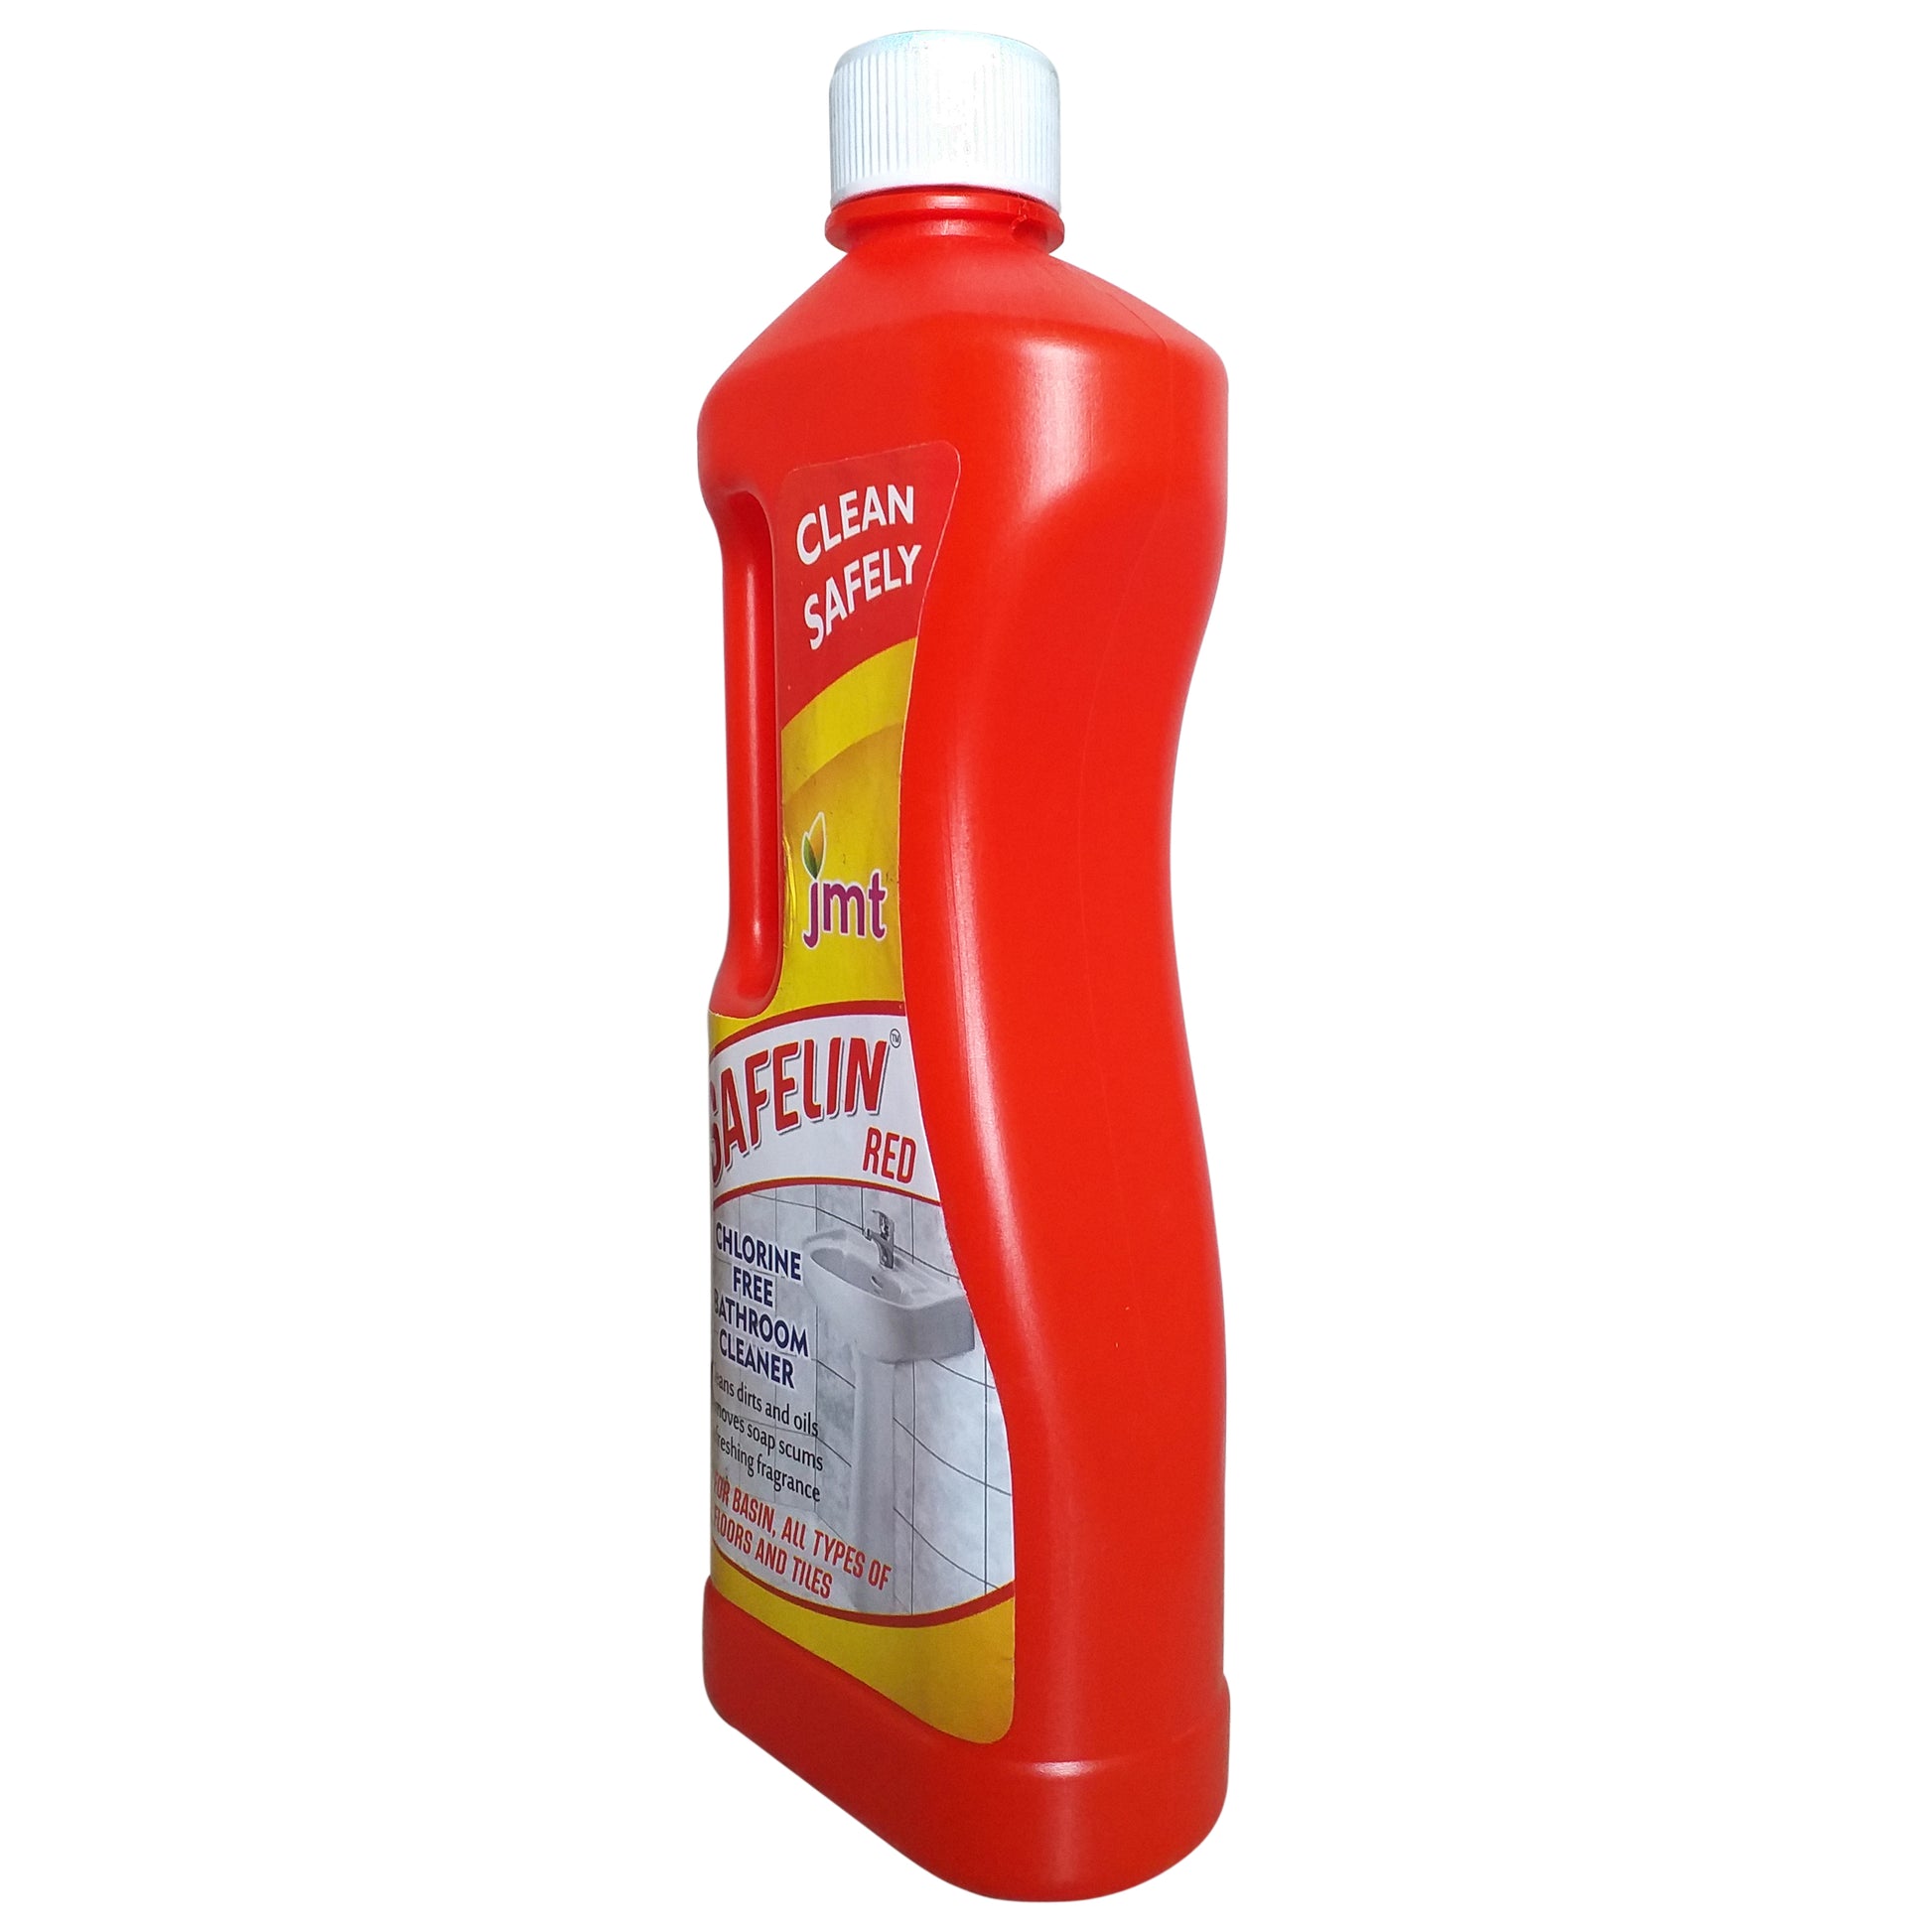 500ml Safelin Red Chlorine Free Regular Use Bathroom Cleaner for All Types of Bathroom Floors, Tiles and Basins